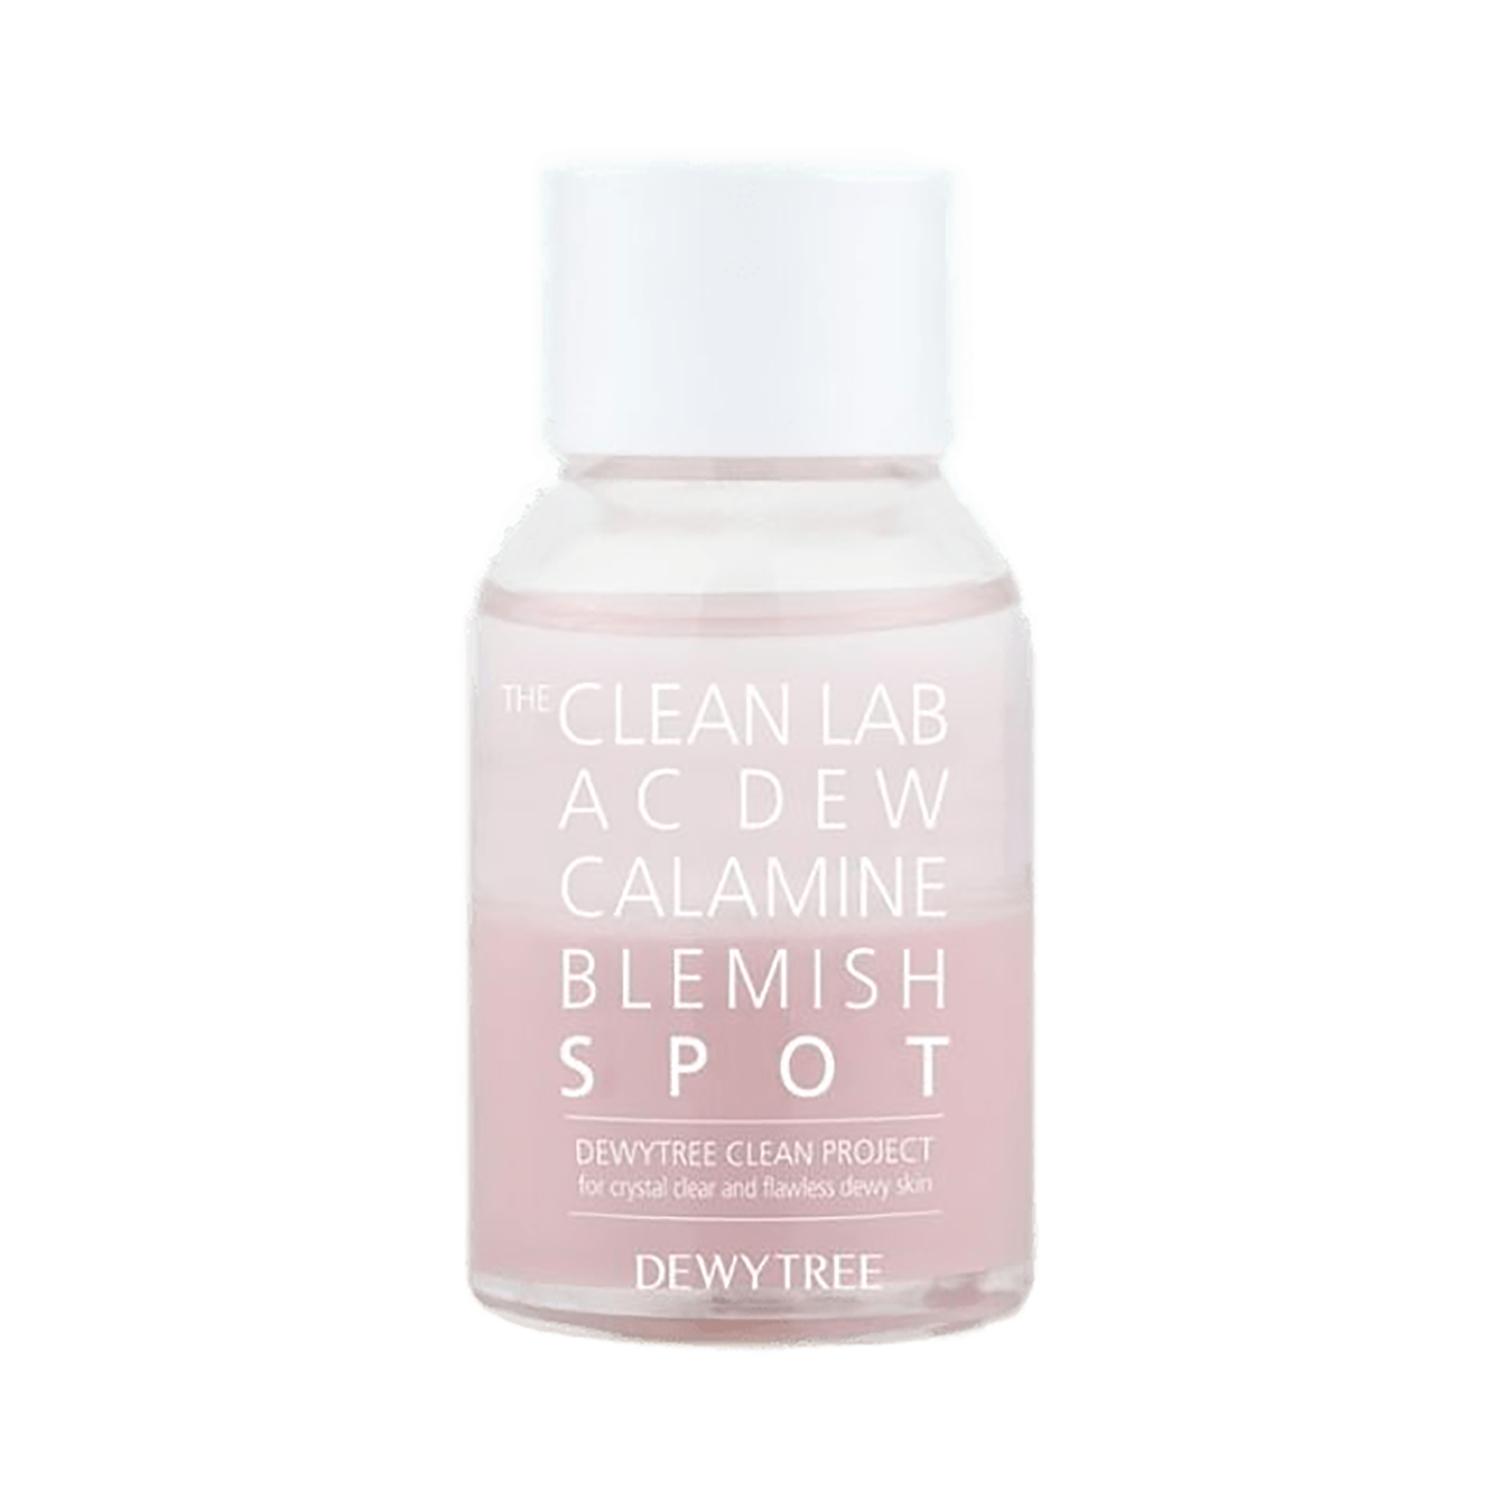 dewytree the clean lab ac dew calamine blemish spot (18g)